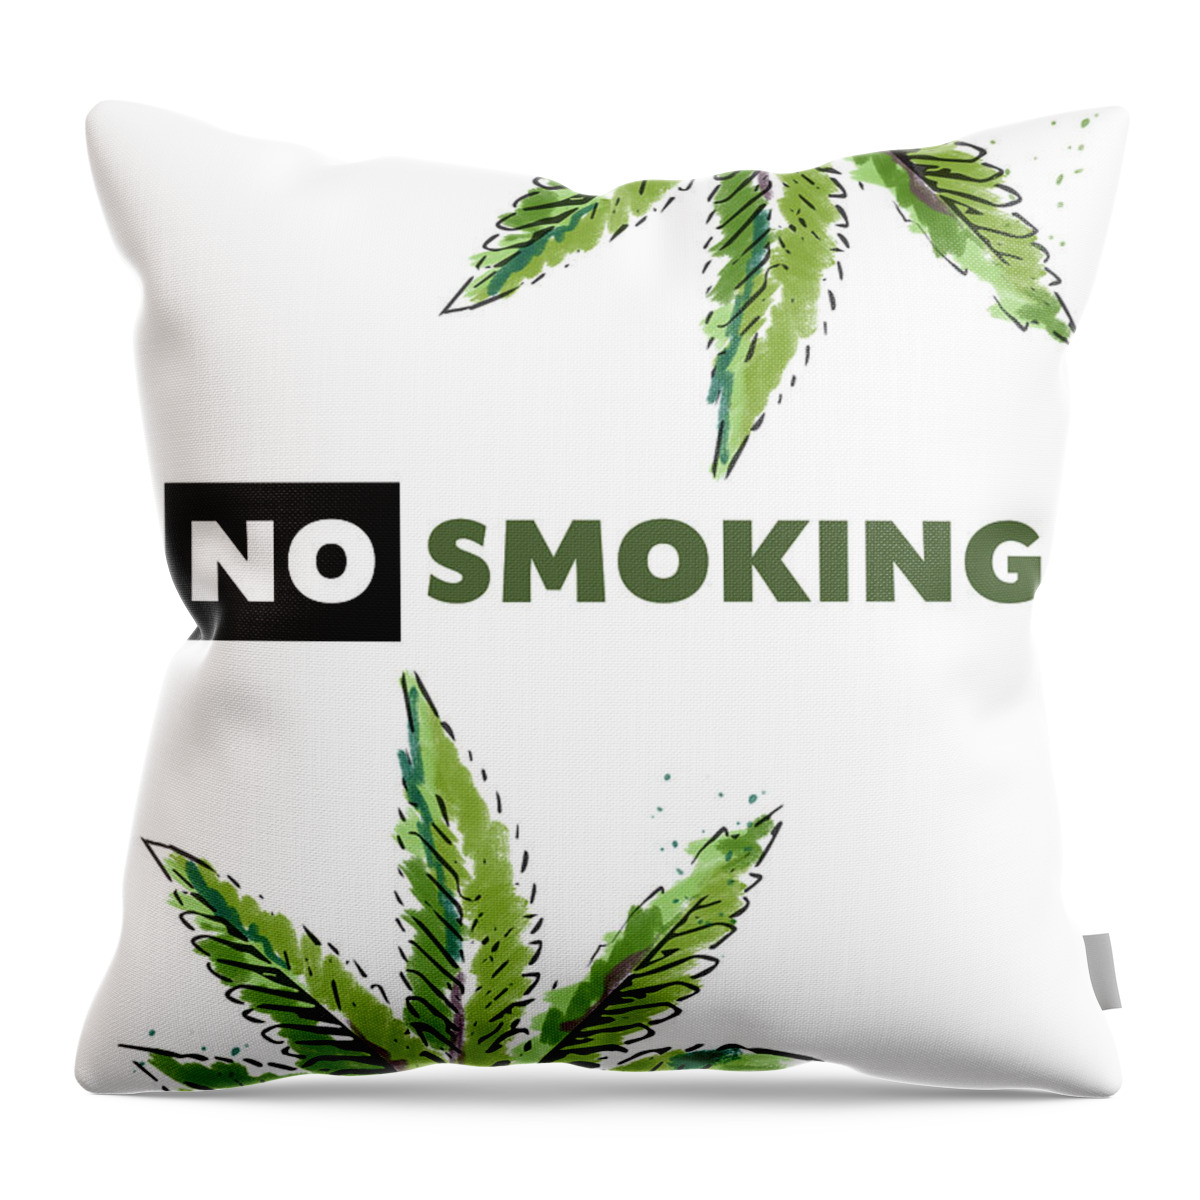 Marijuana Throw Pillow featuring the mixed media No Smoking - Art by Linda Woods by Linda Woods